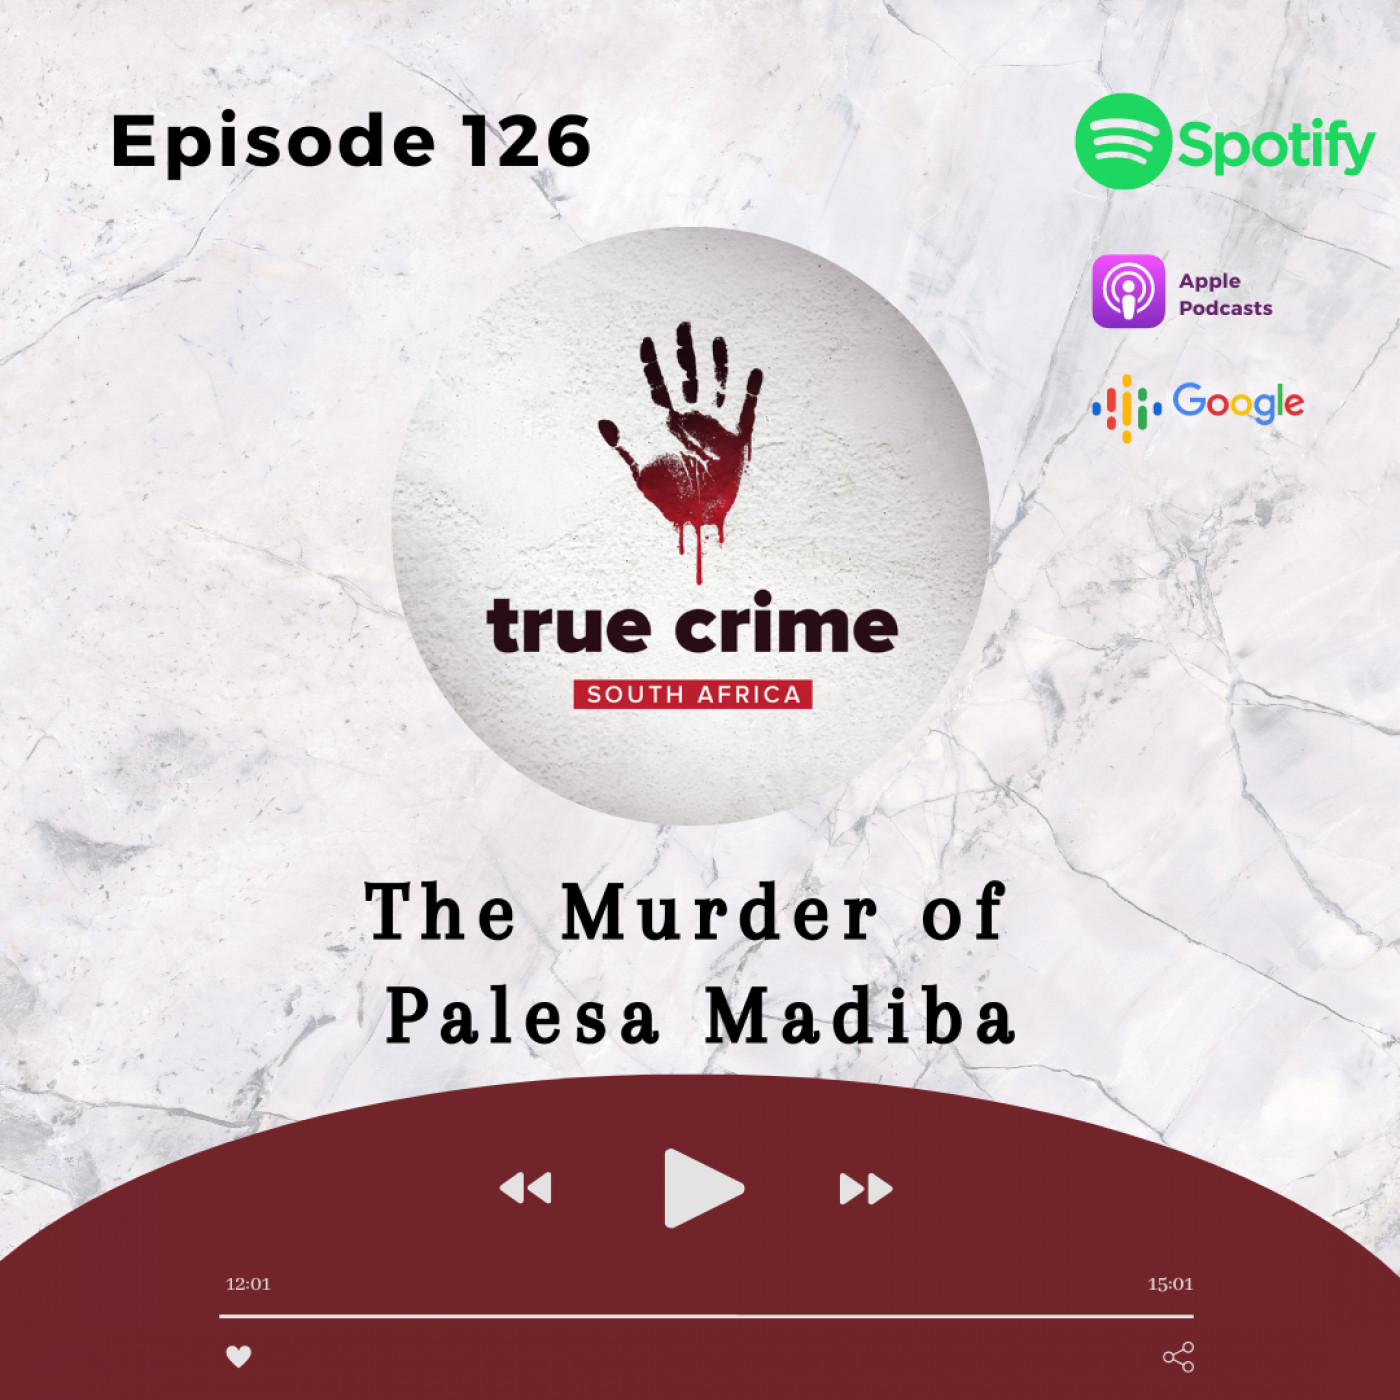 Episode 126 The Murder of Palesa Madiba